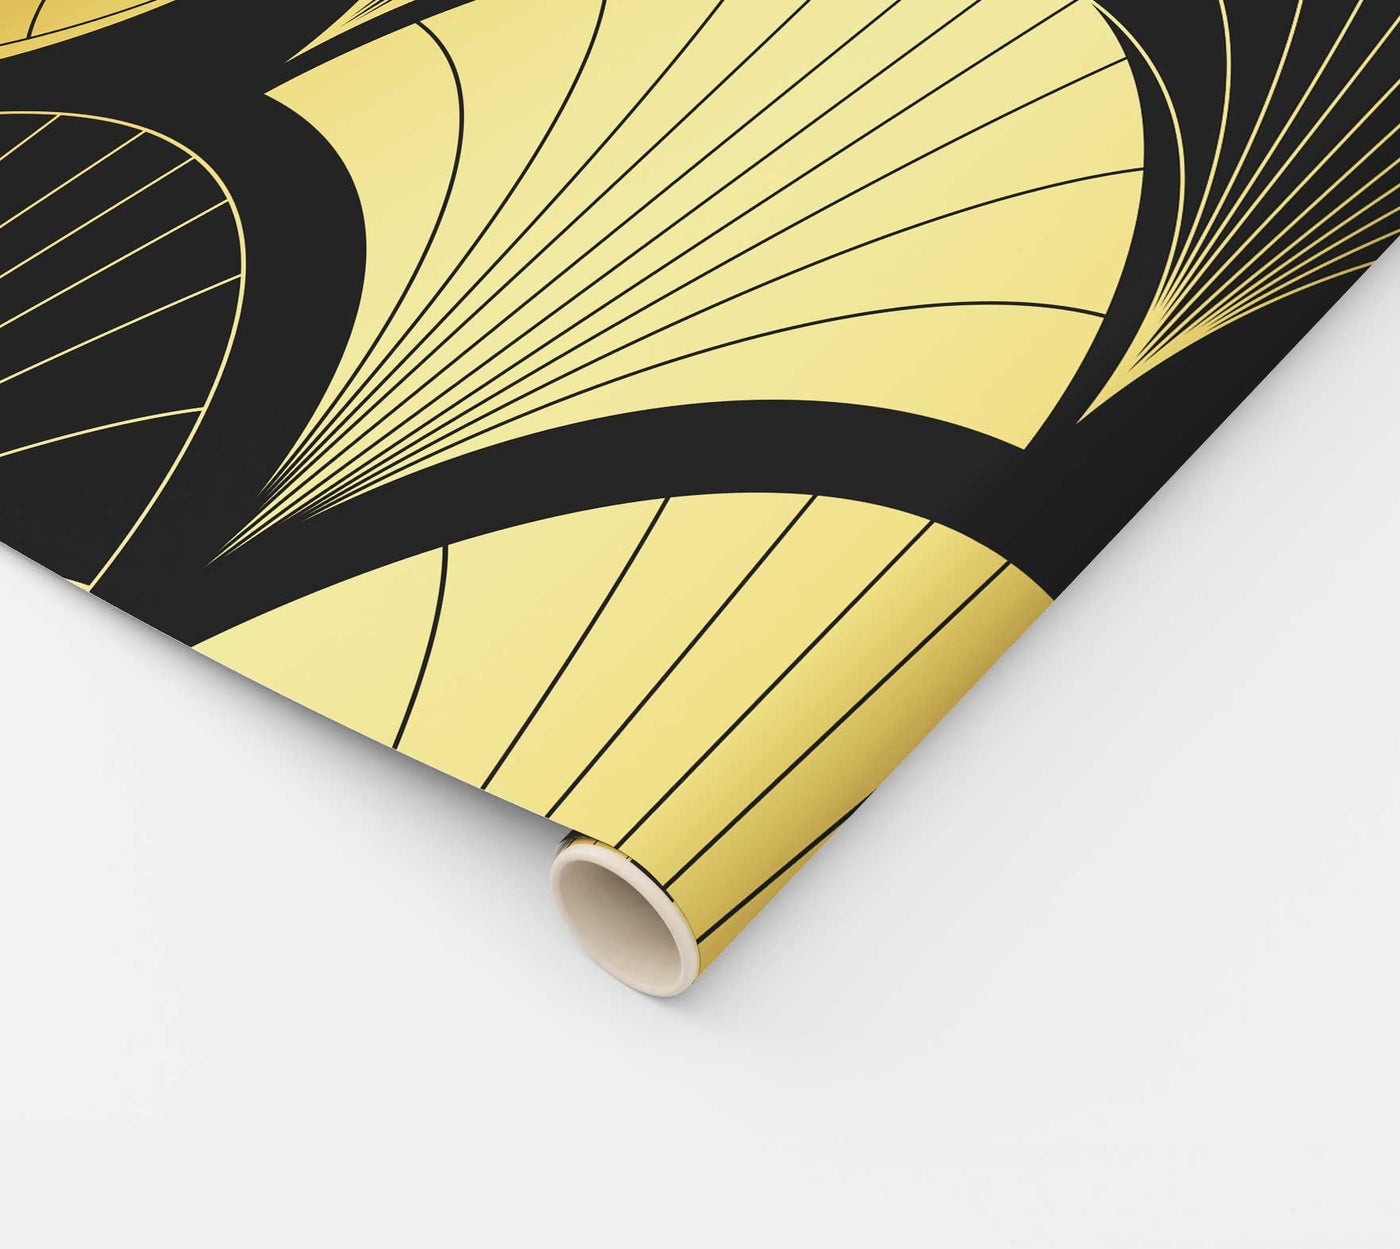 Asian Deco Wallpaper #389-Repeat Pattern Wallpaper-Eazywallz